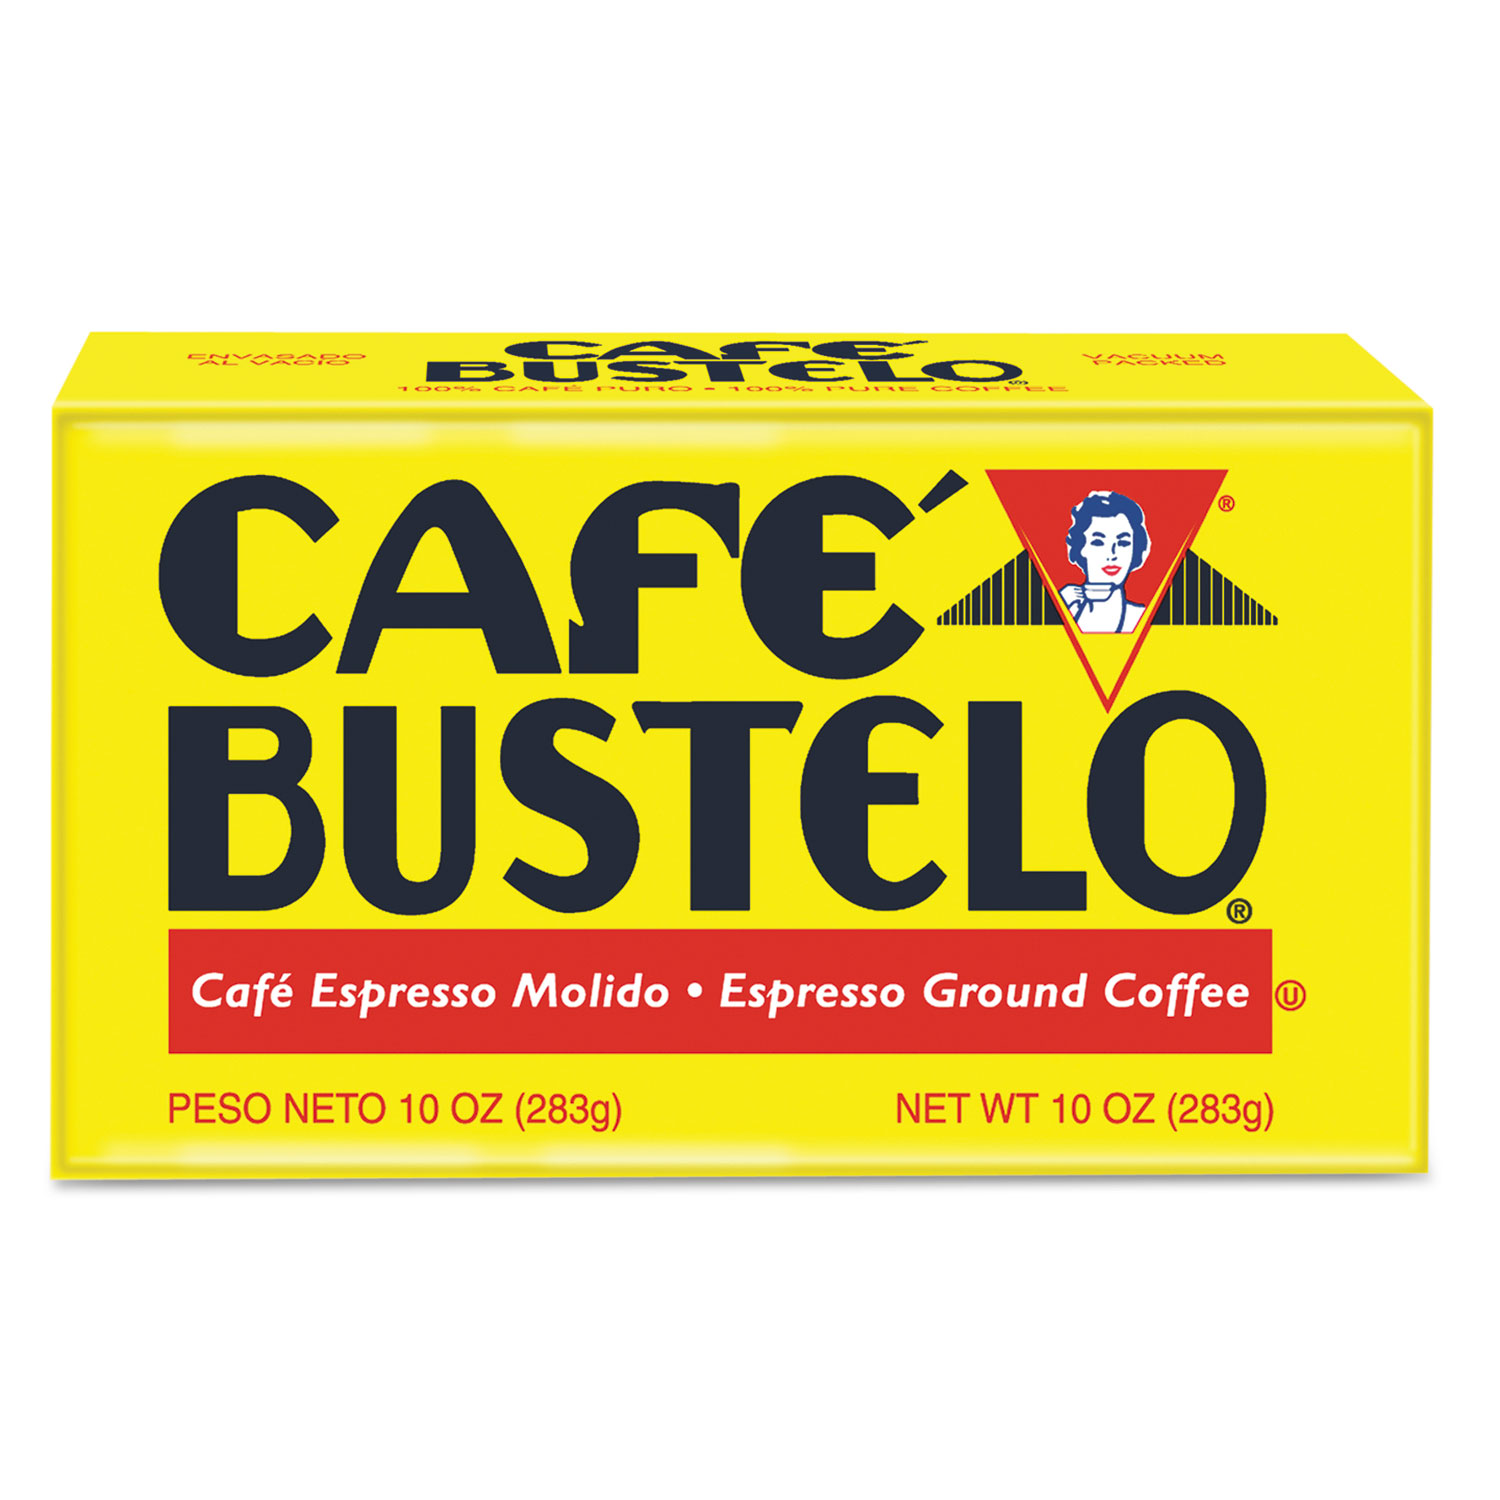  Café Bustelo 7441701720 Coffee, Espresso, 10 oz Brick Pack (FOL01720) 